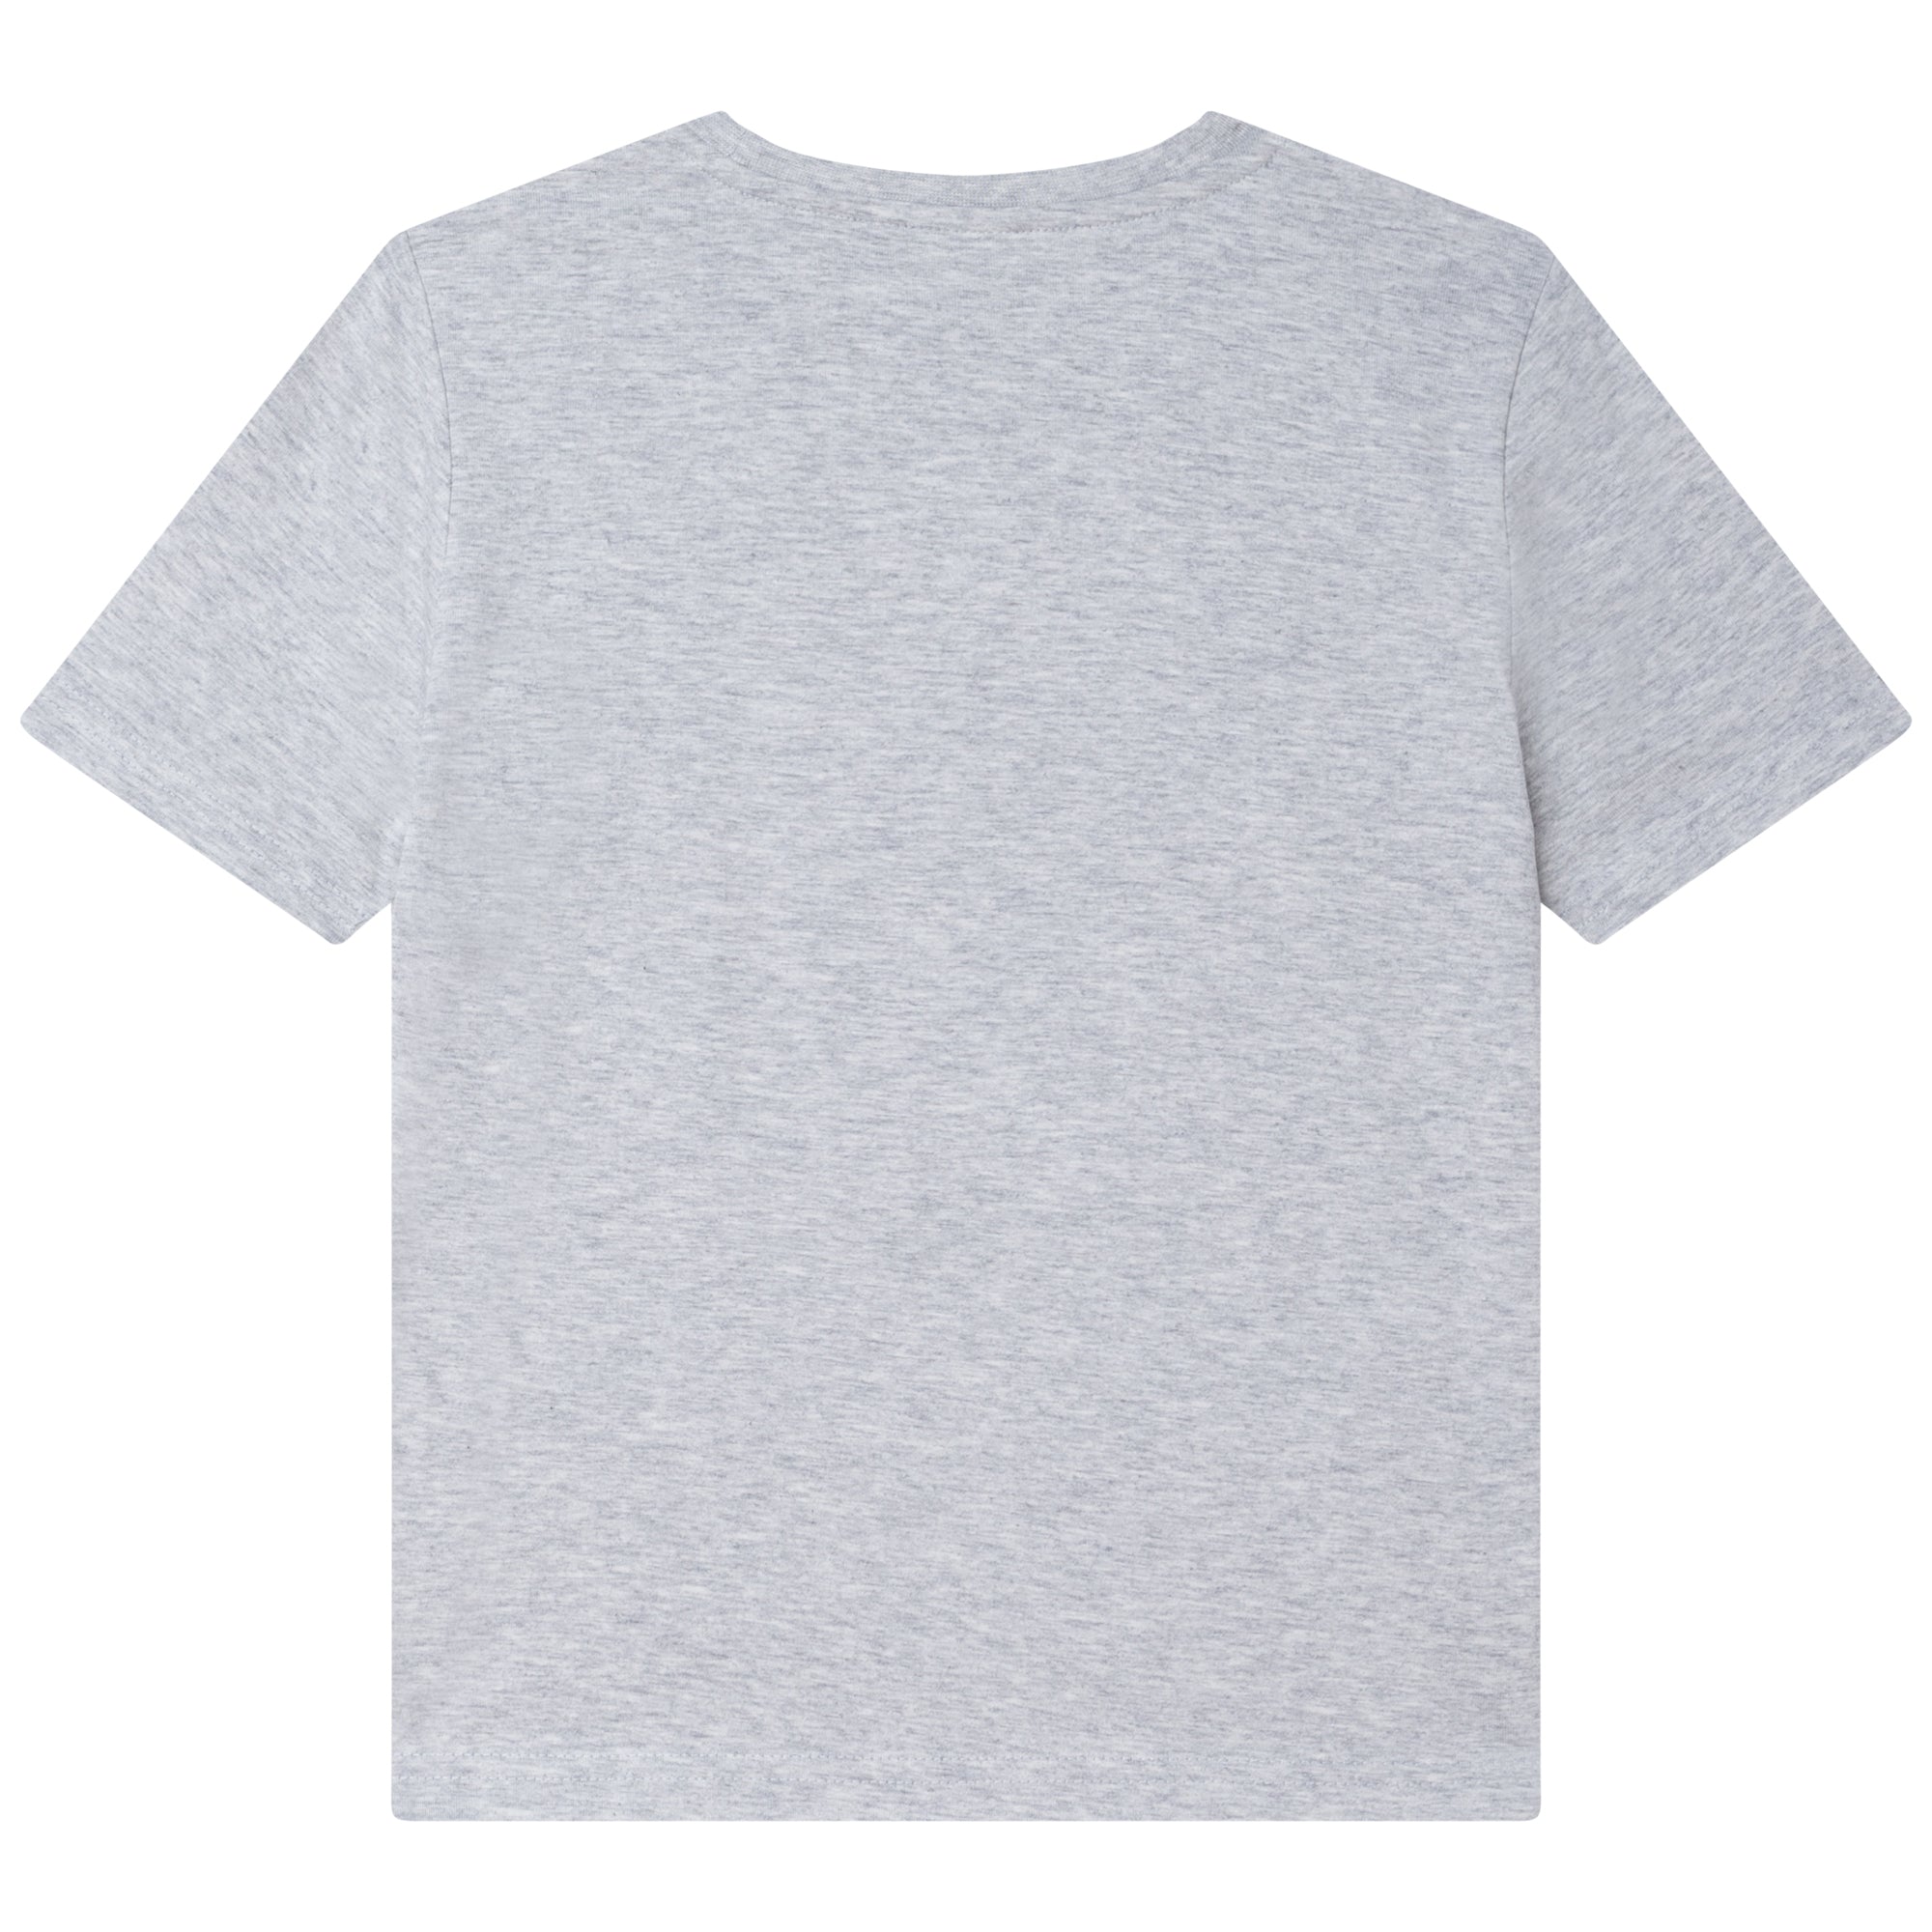 Hugo Boss Boys Grey Logo T-shirt 4Y